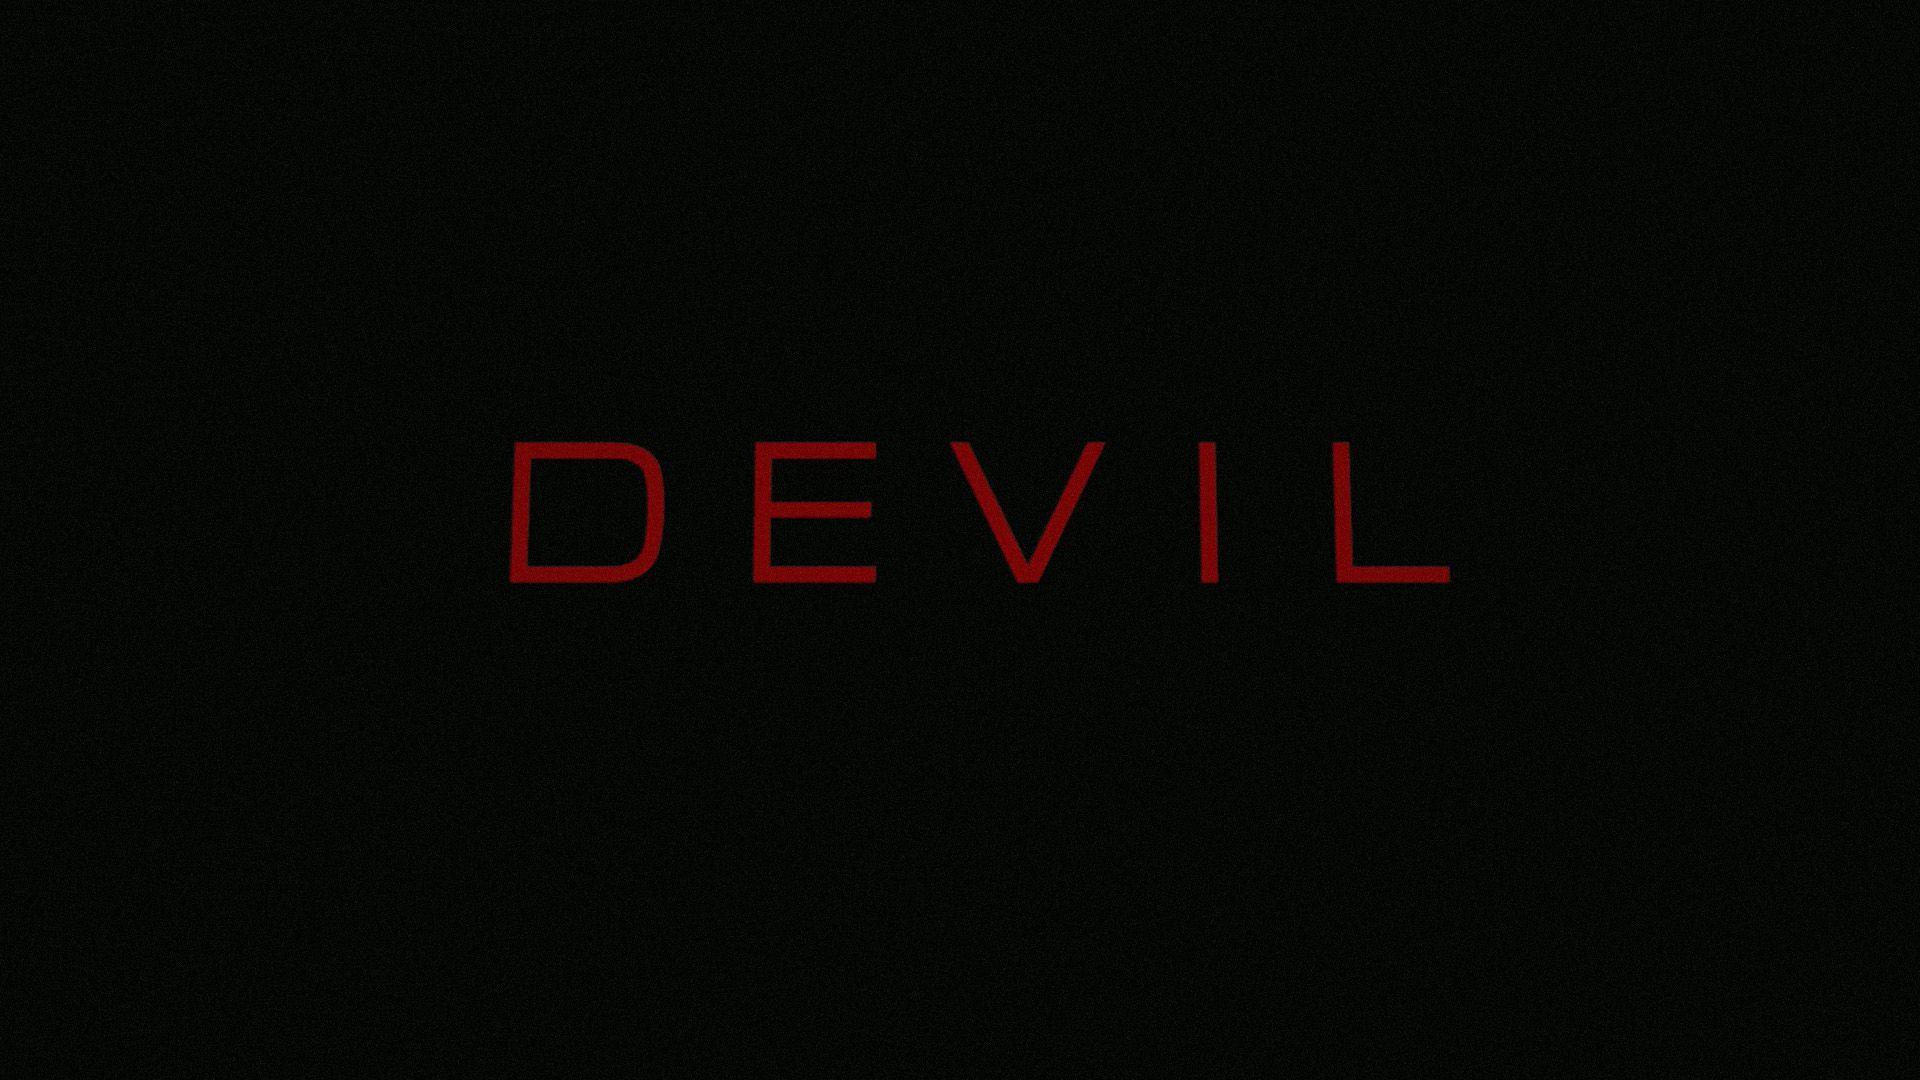 Devil Background Image. Beautiful image HD Picture & Desktop